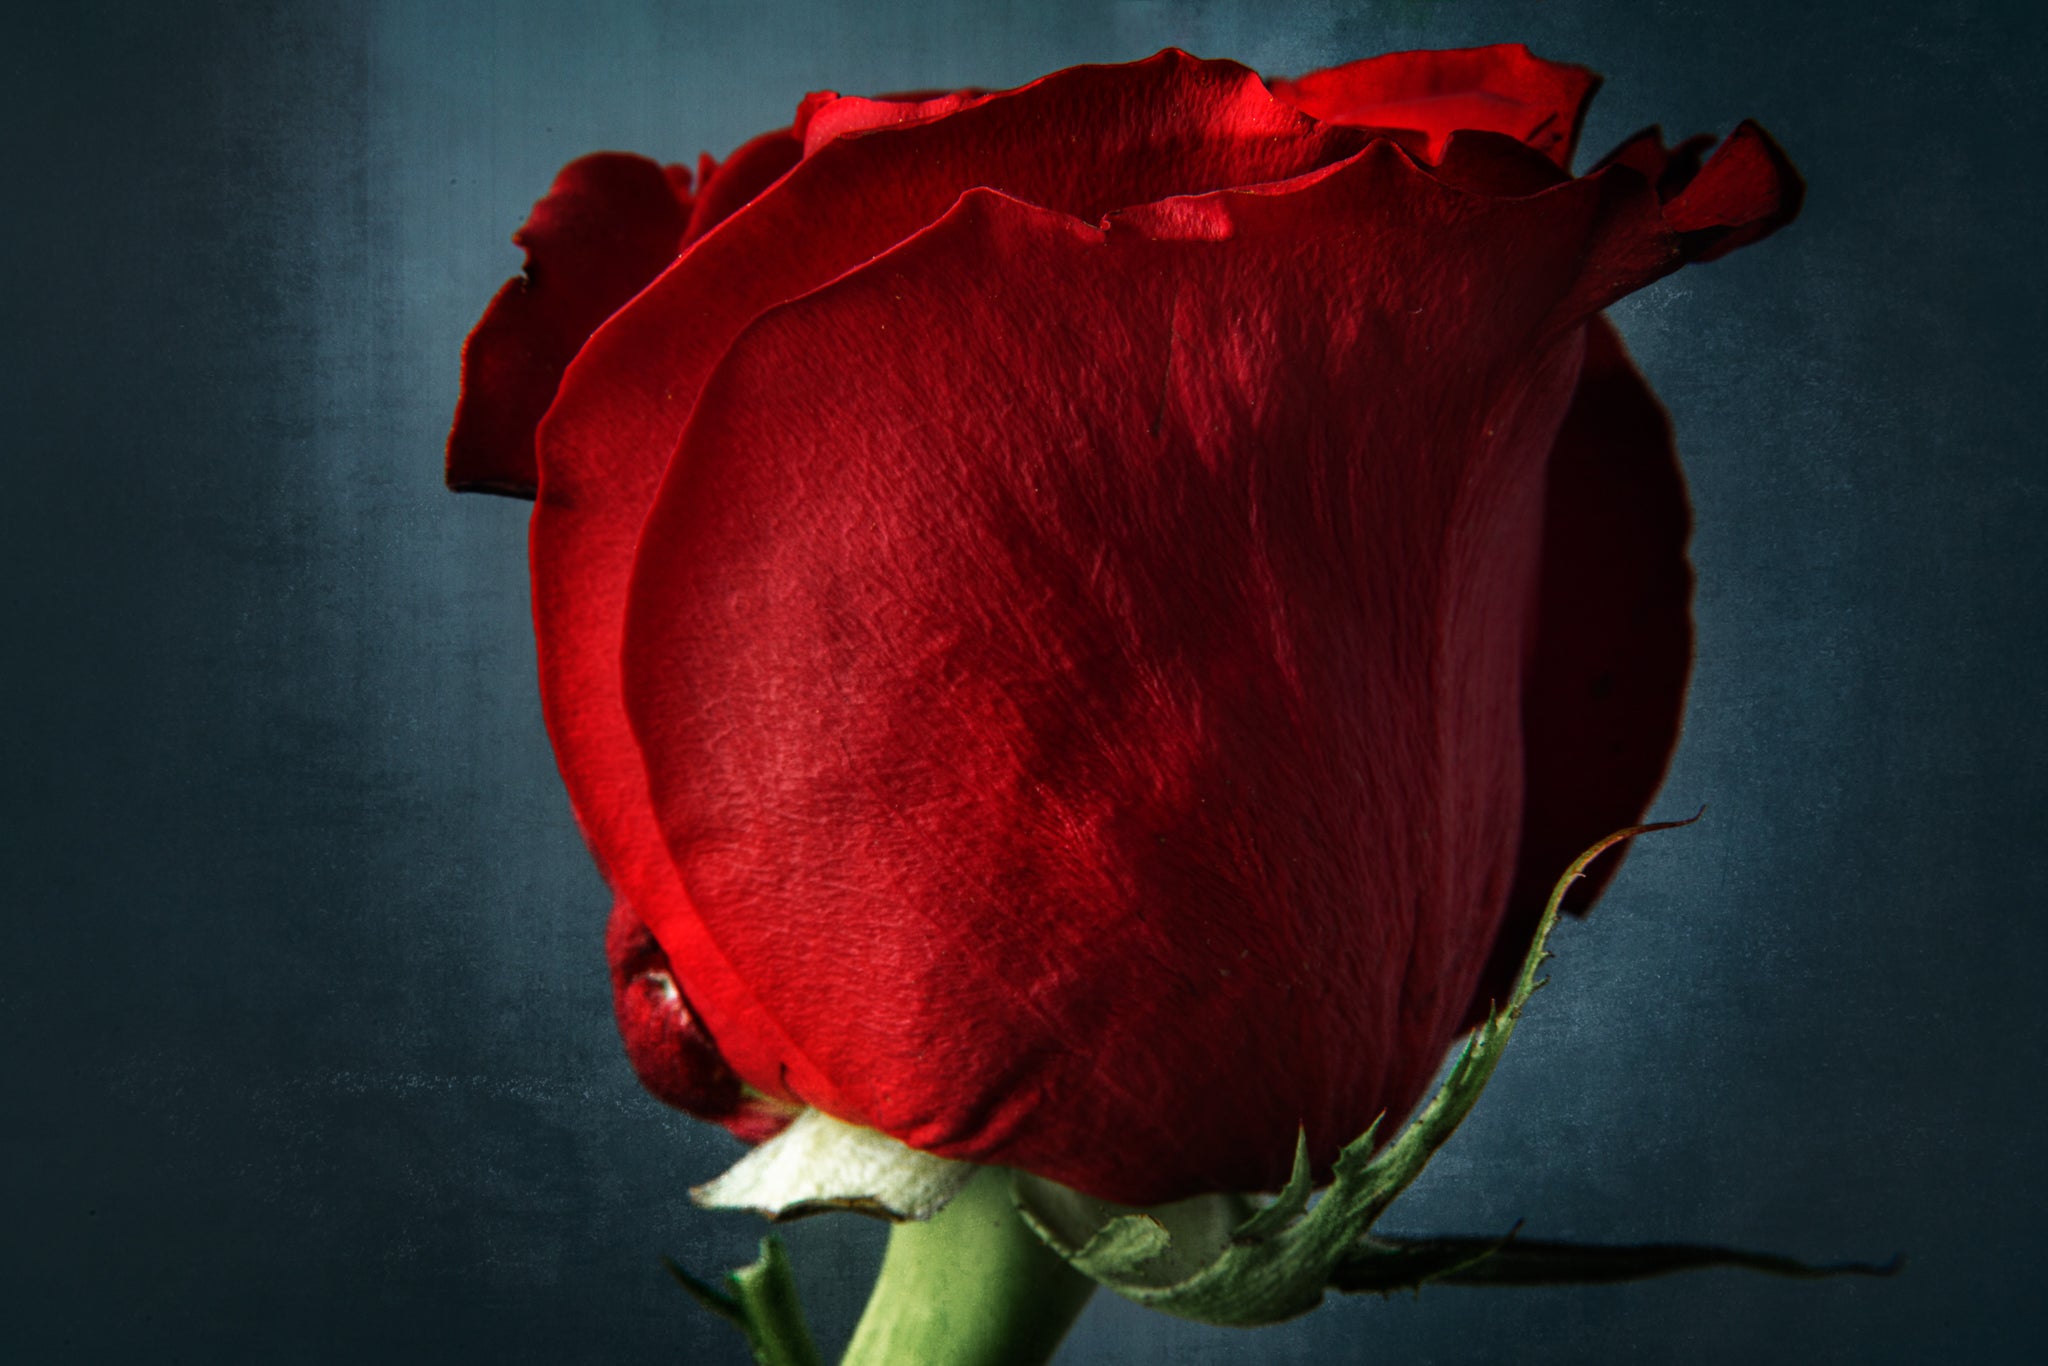 Fine art flower photography of a red rose tilted "Dangerous" by Cameron Dreaux of Dreaux Fine Art.